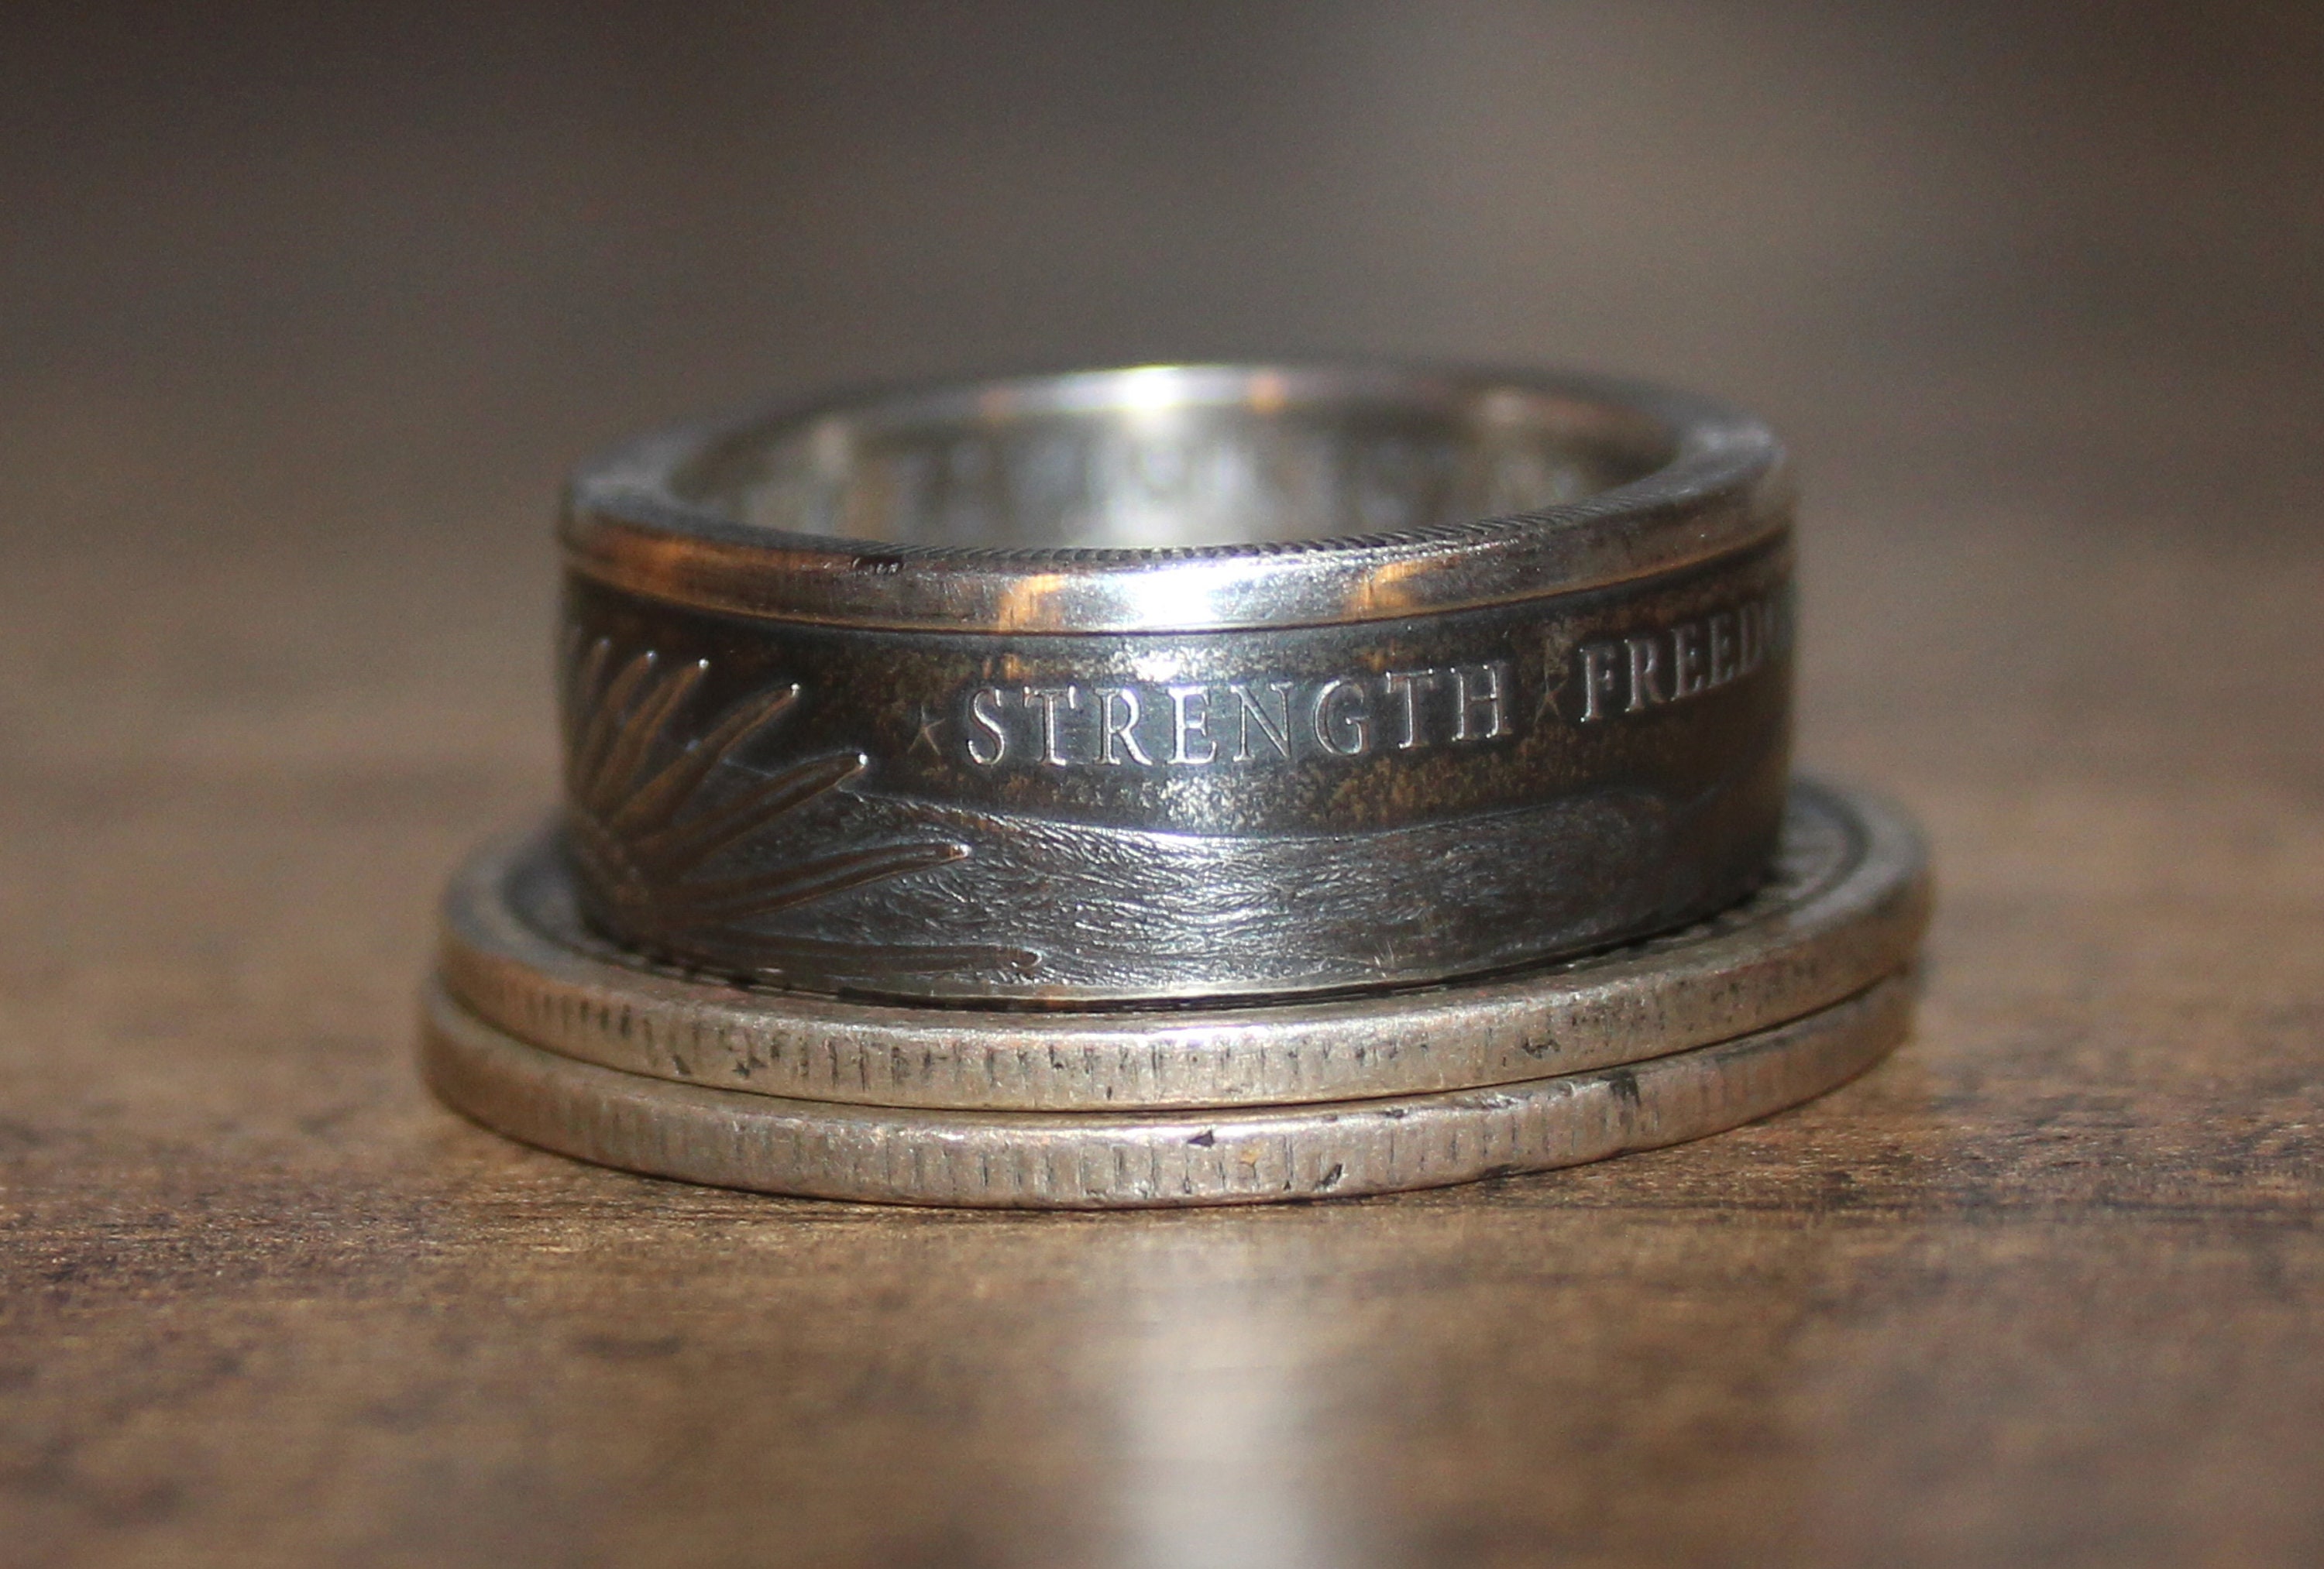 Strength ring